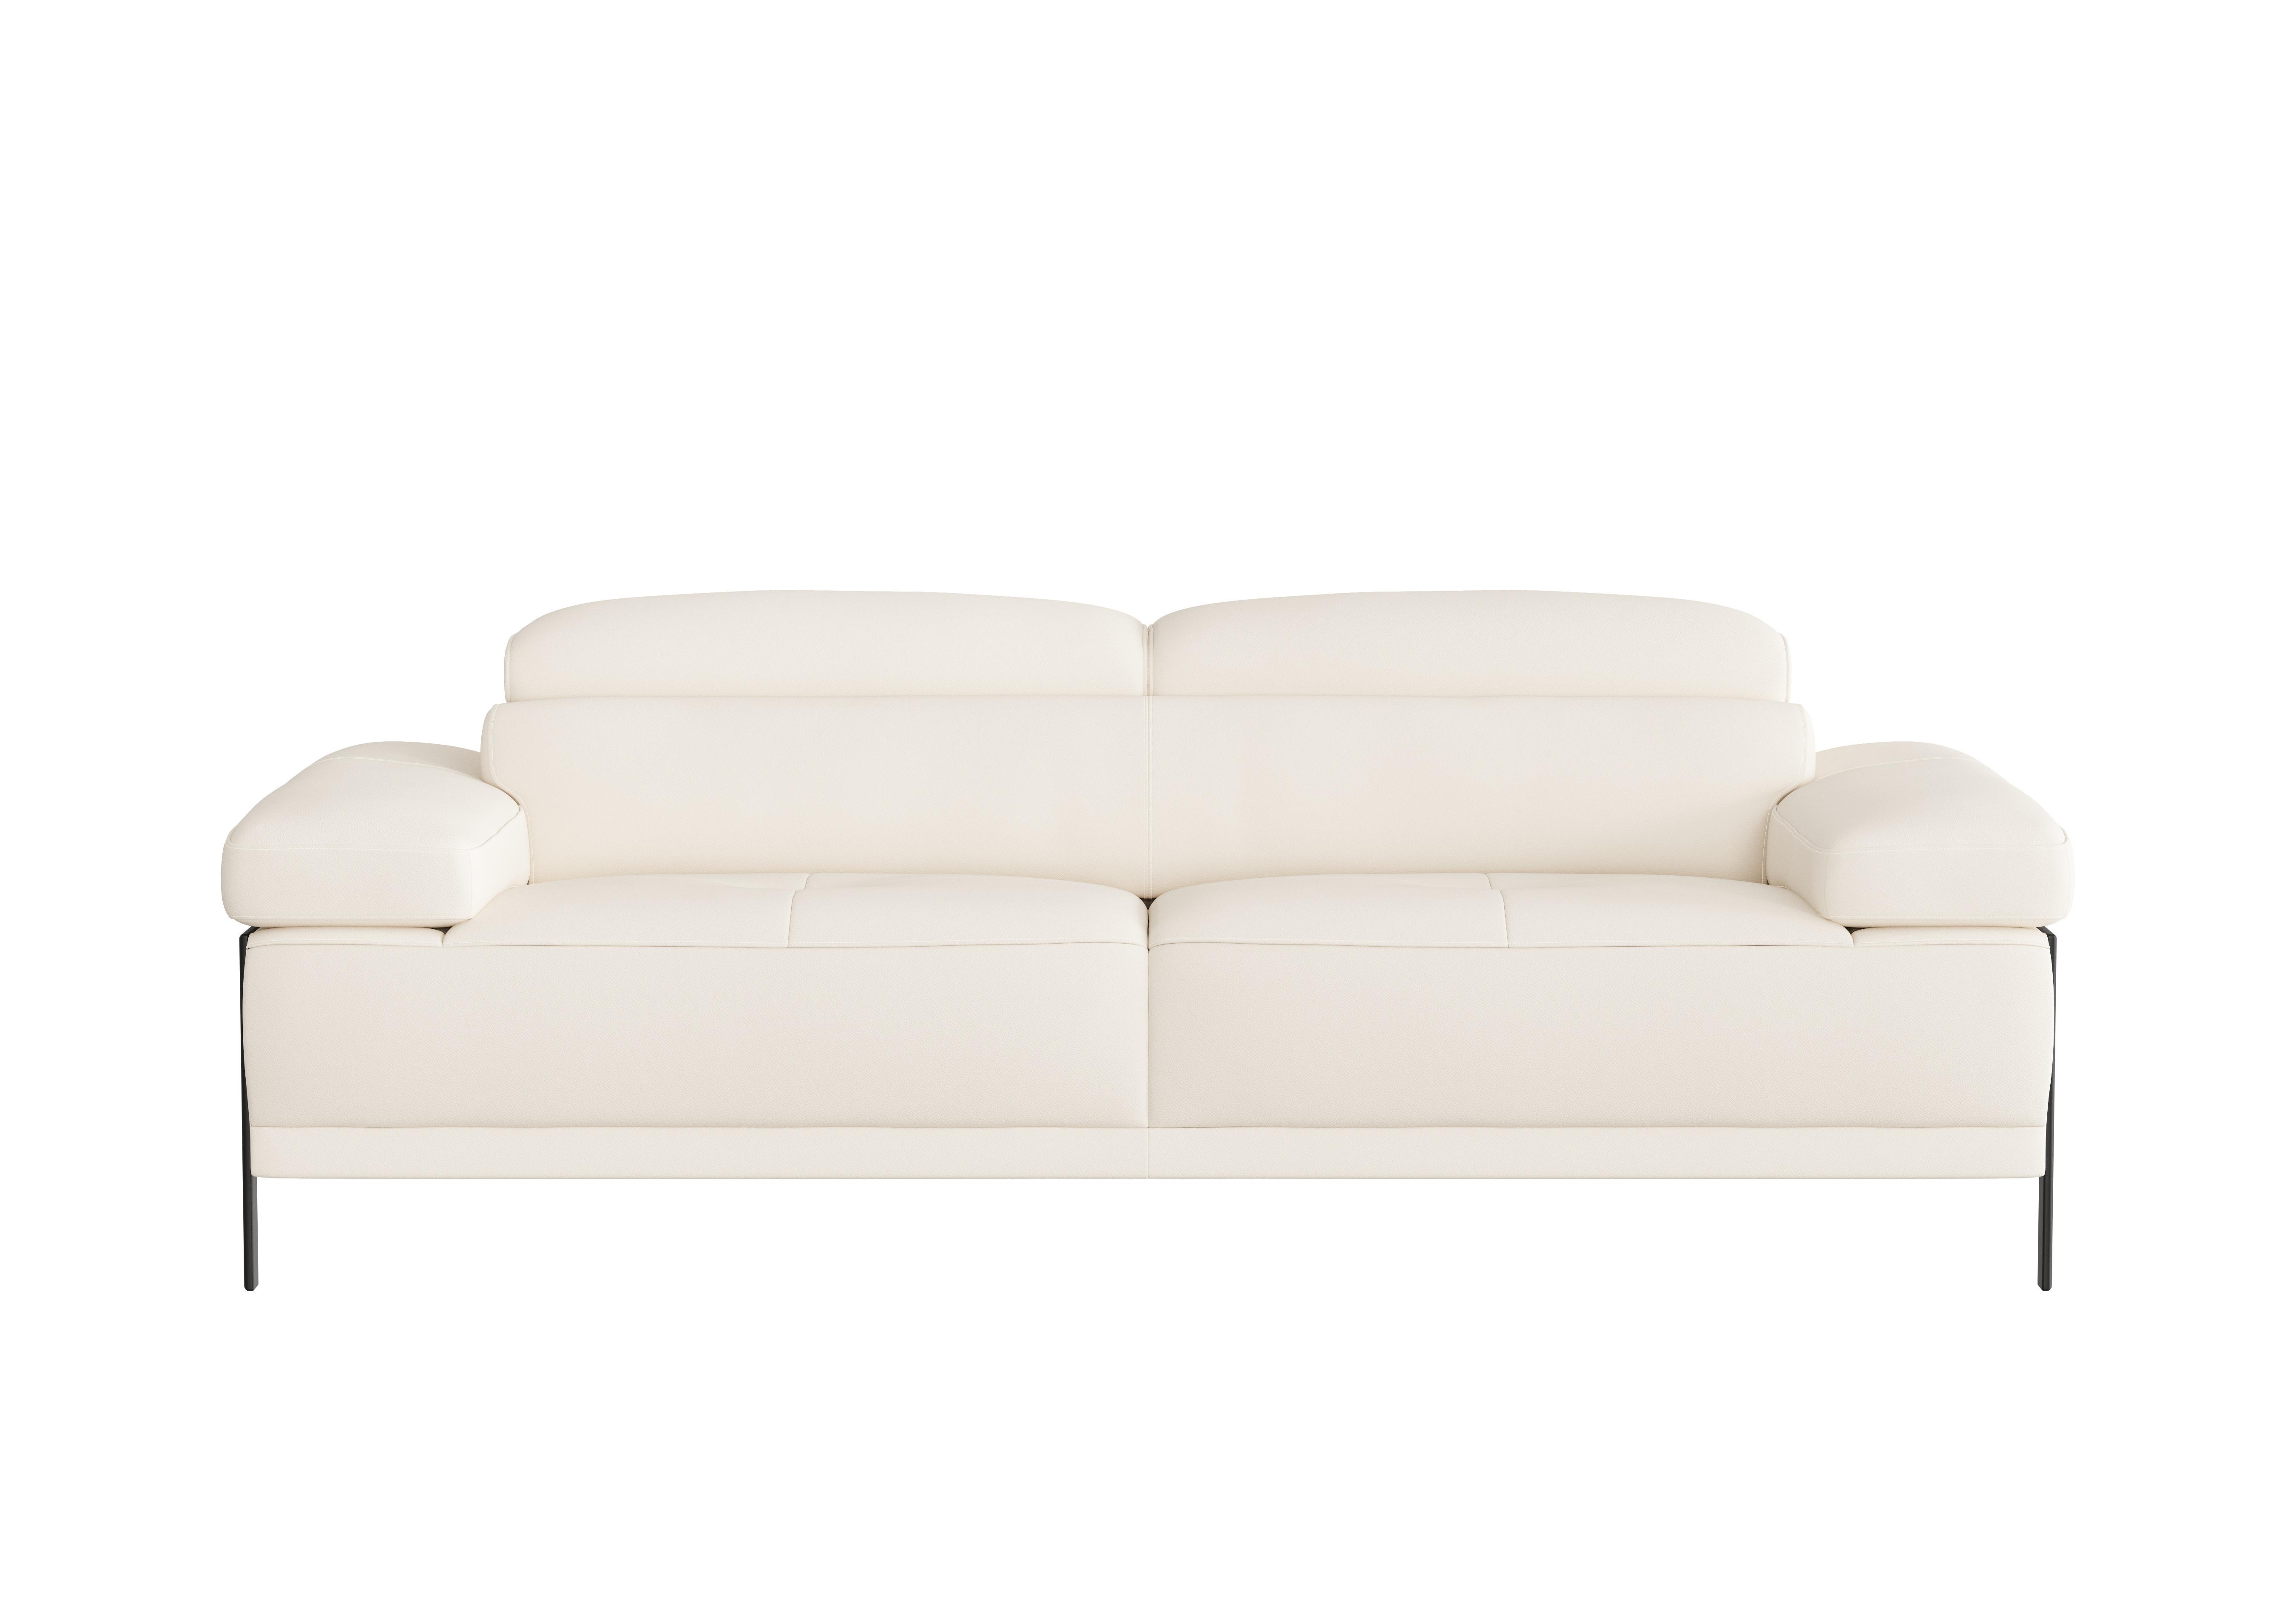 Theron 3 Seater Leather Sofa in Torello Bianco 93 Ti Ft on Furniture Village